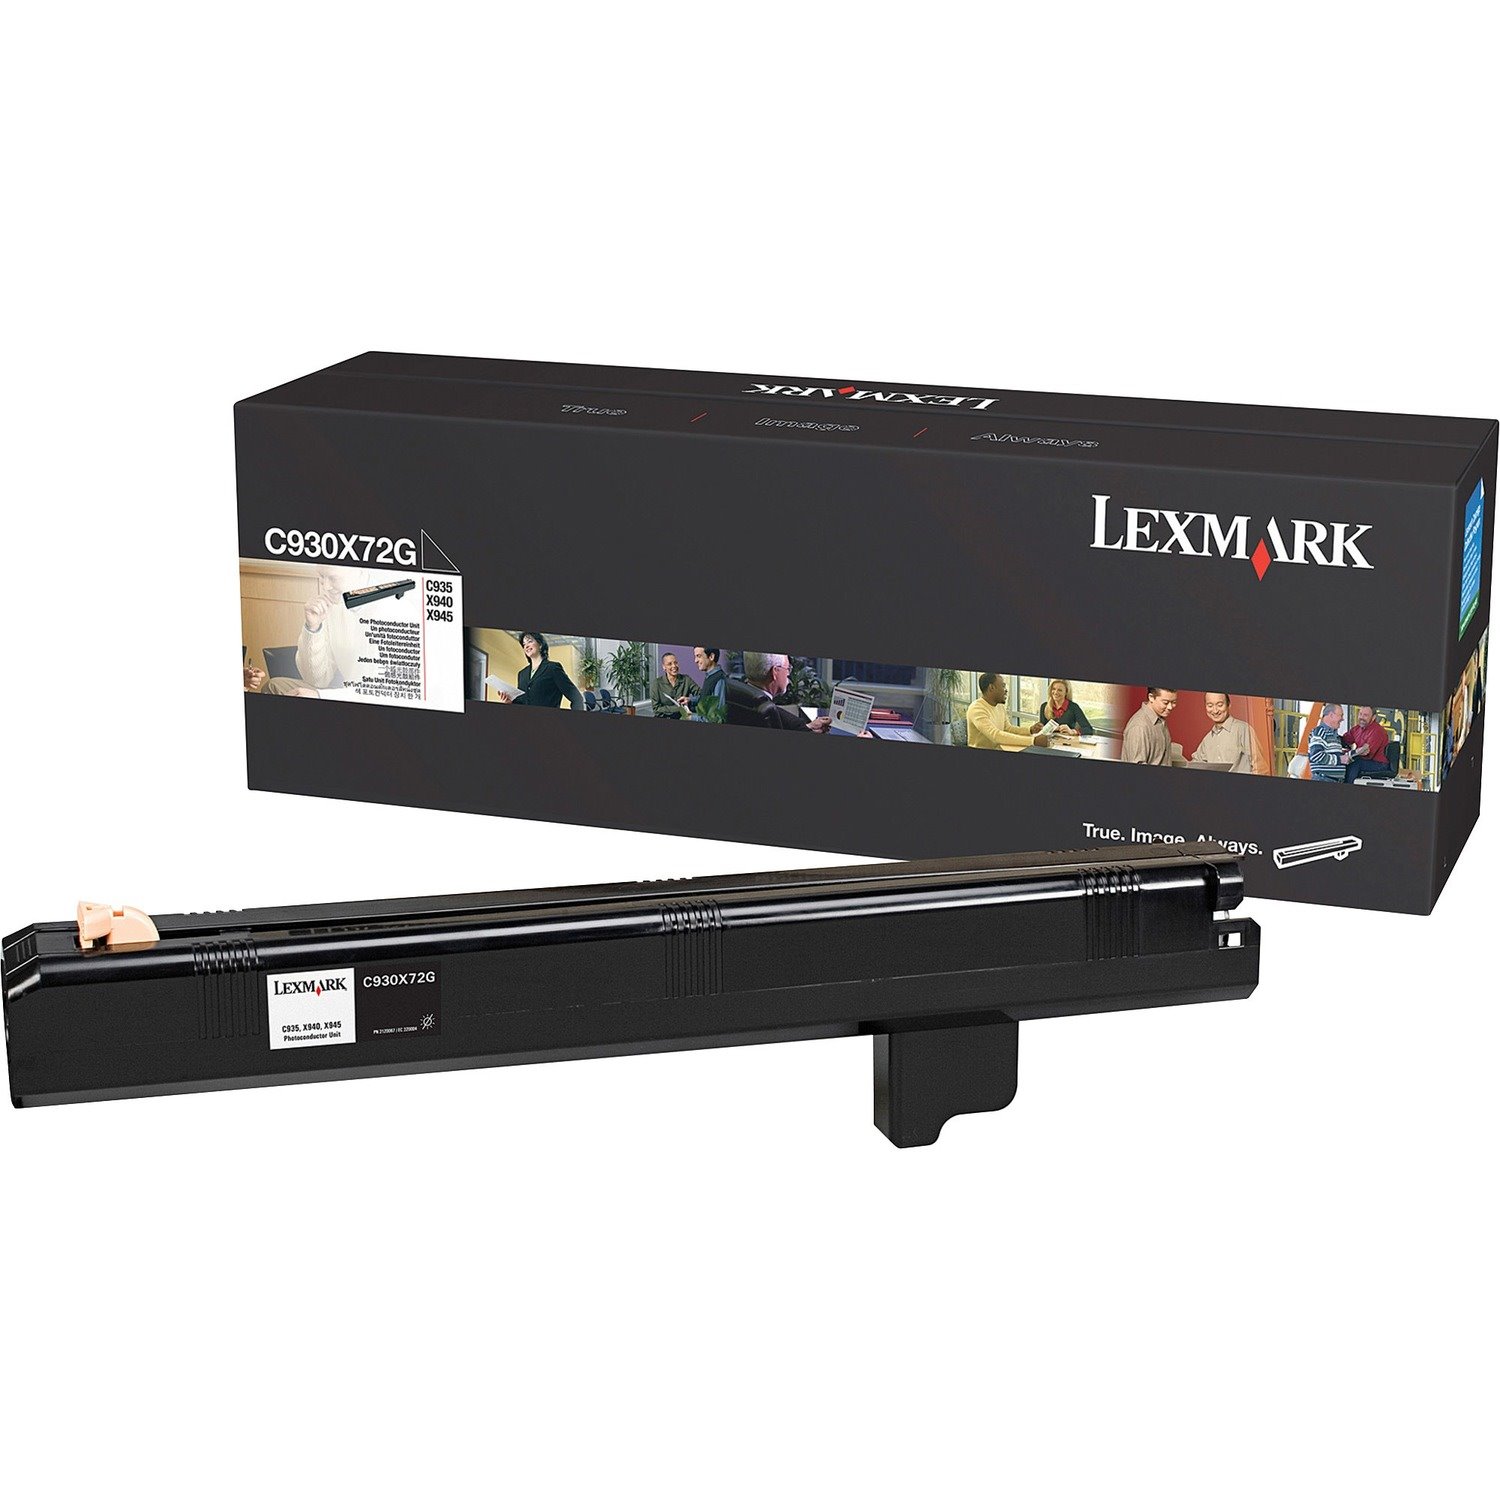 Lexmark C93X72G Photo Conductor Kit